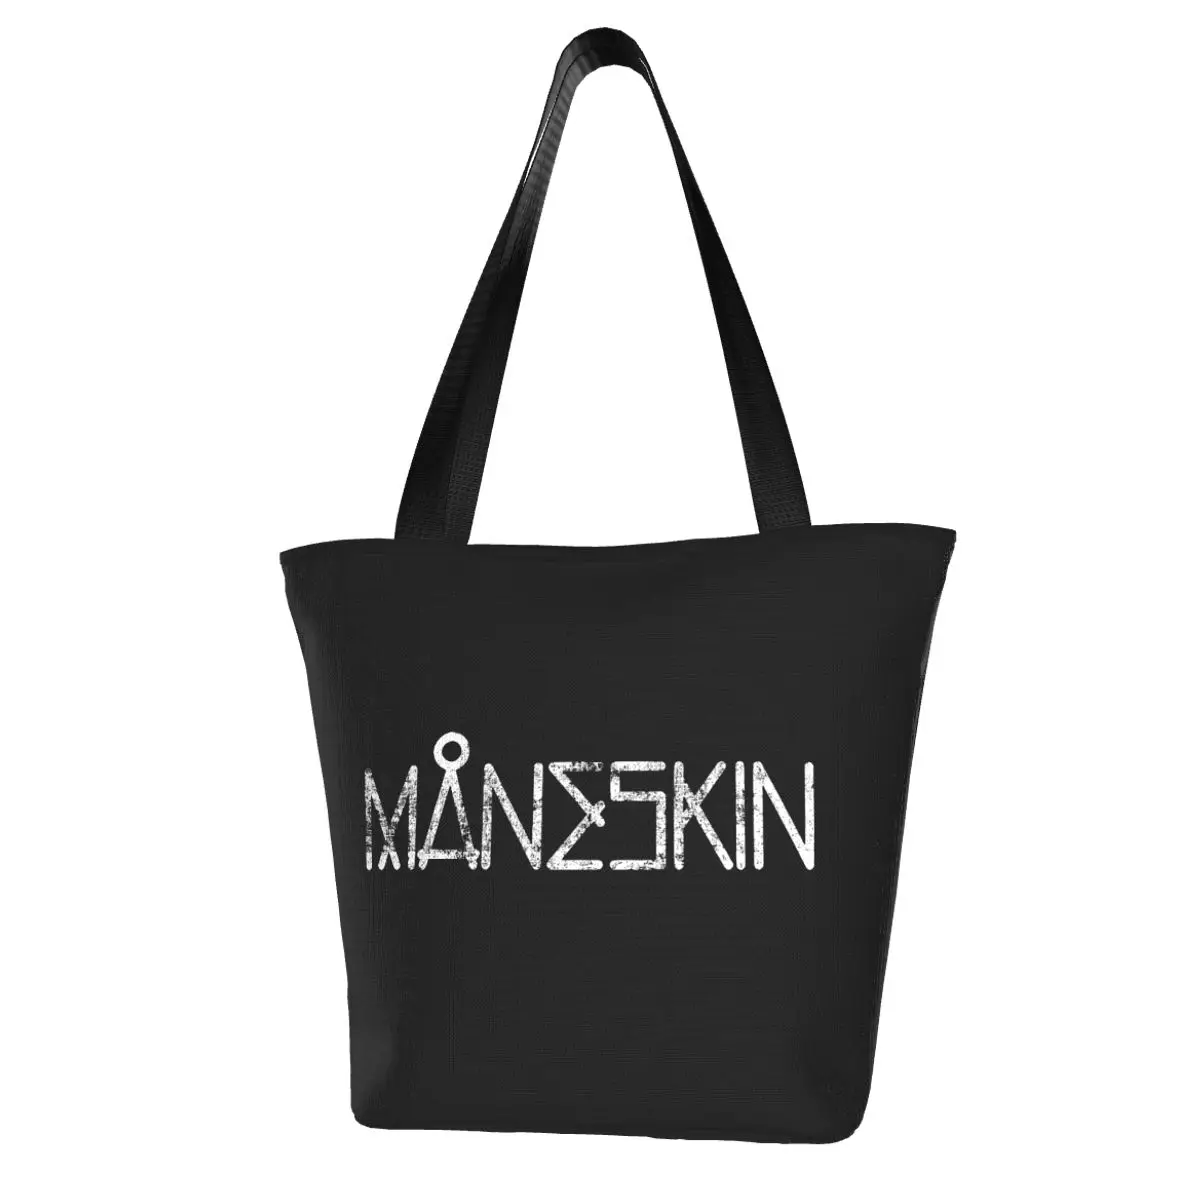 Maneskin Shopping Bag Aesthetic Cloth Outdoor Handbag Female Fashion Bags